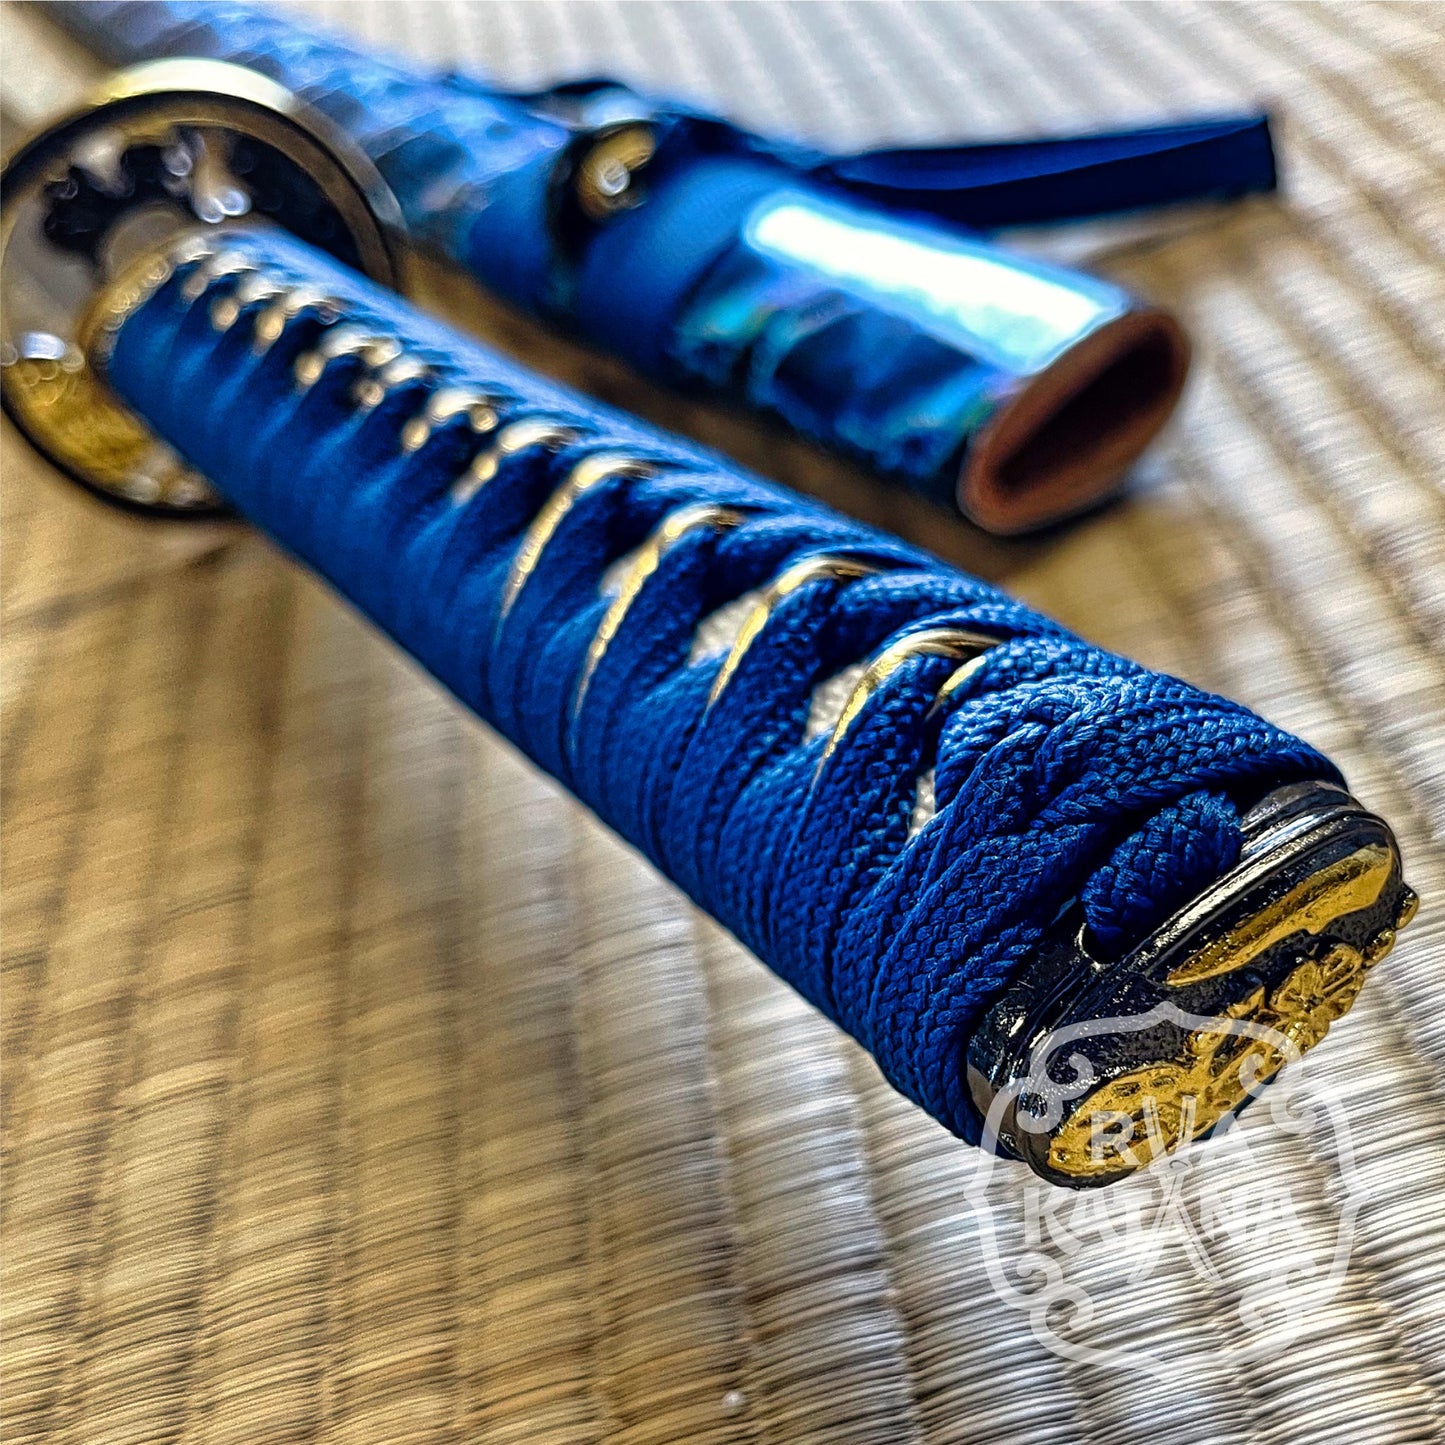 Katana, 1060 Steel, Blue Blade, Golden Lion Theme